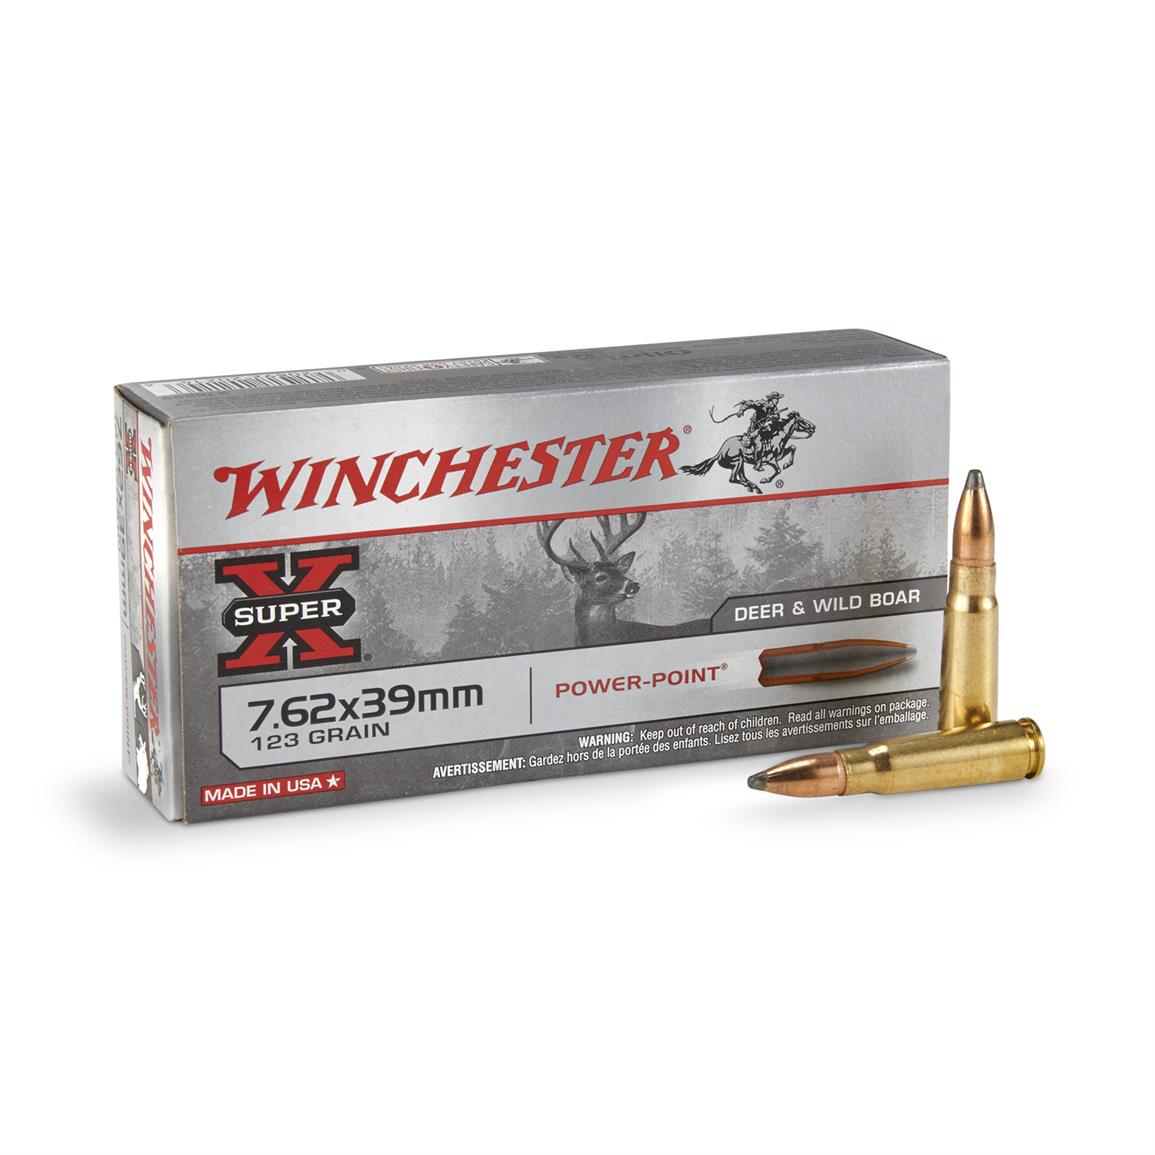 Winchester Super-X, 7.62x39mm, PP, 123 Grain, 20 Rounds